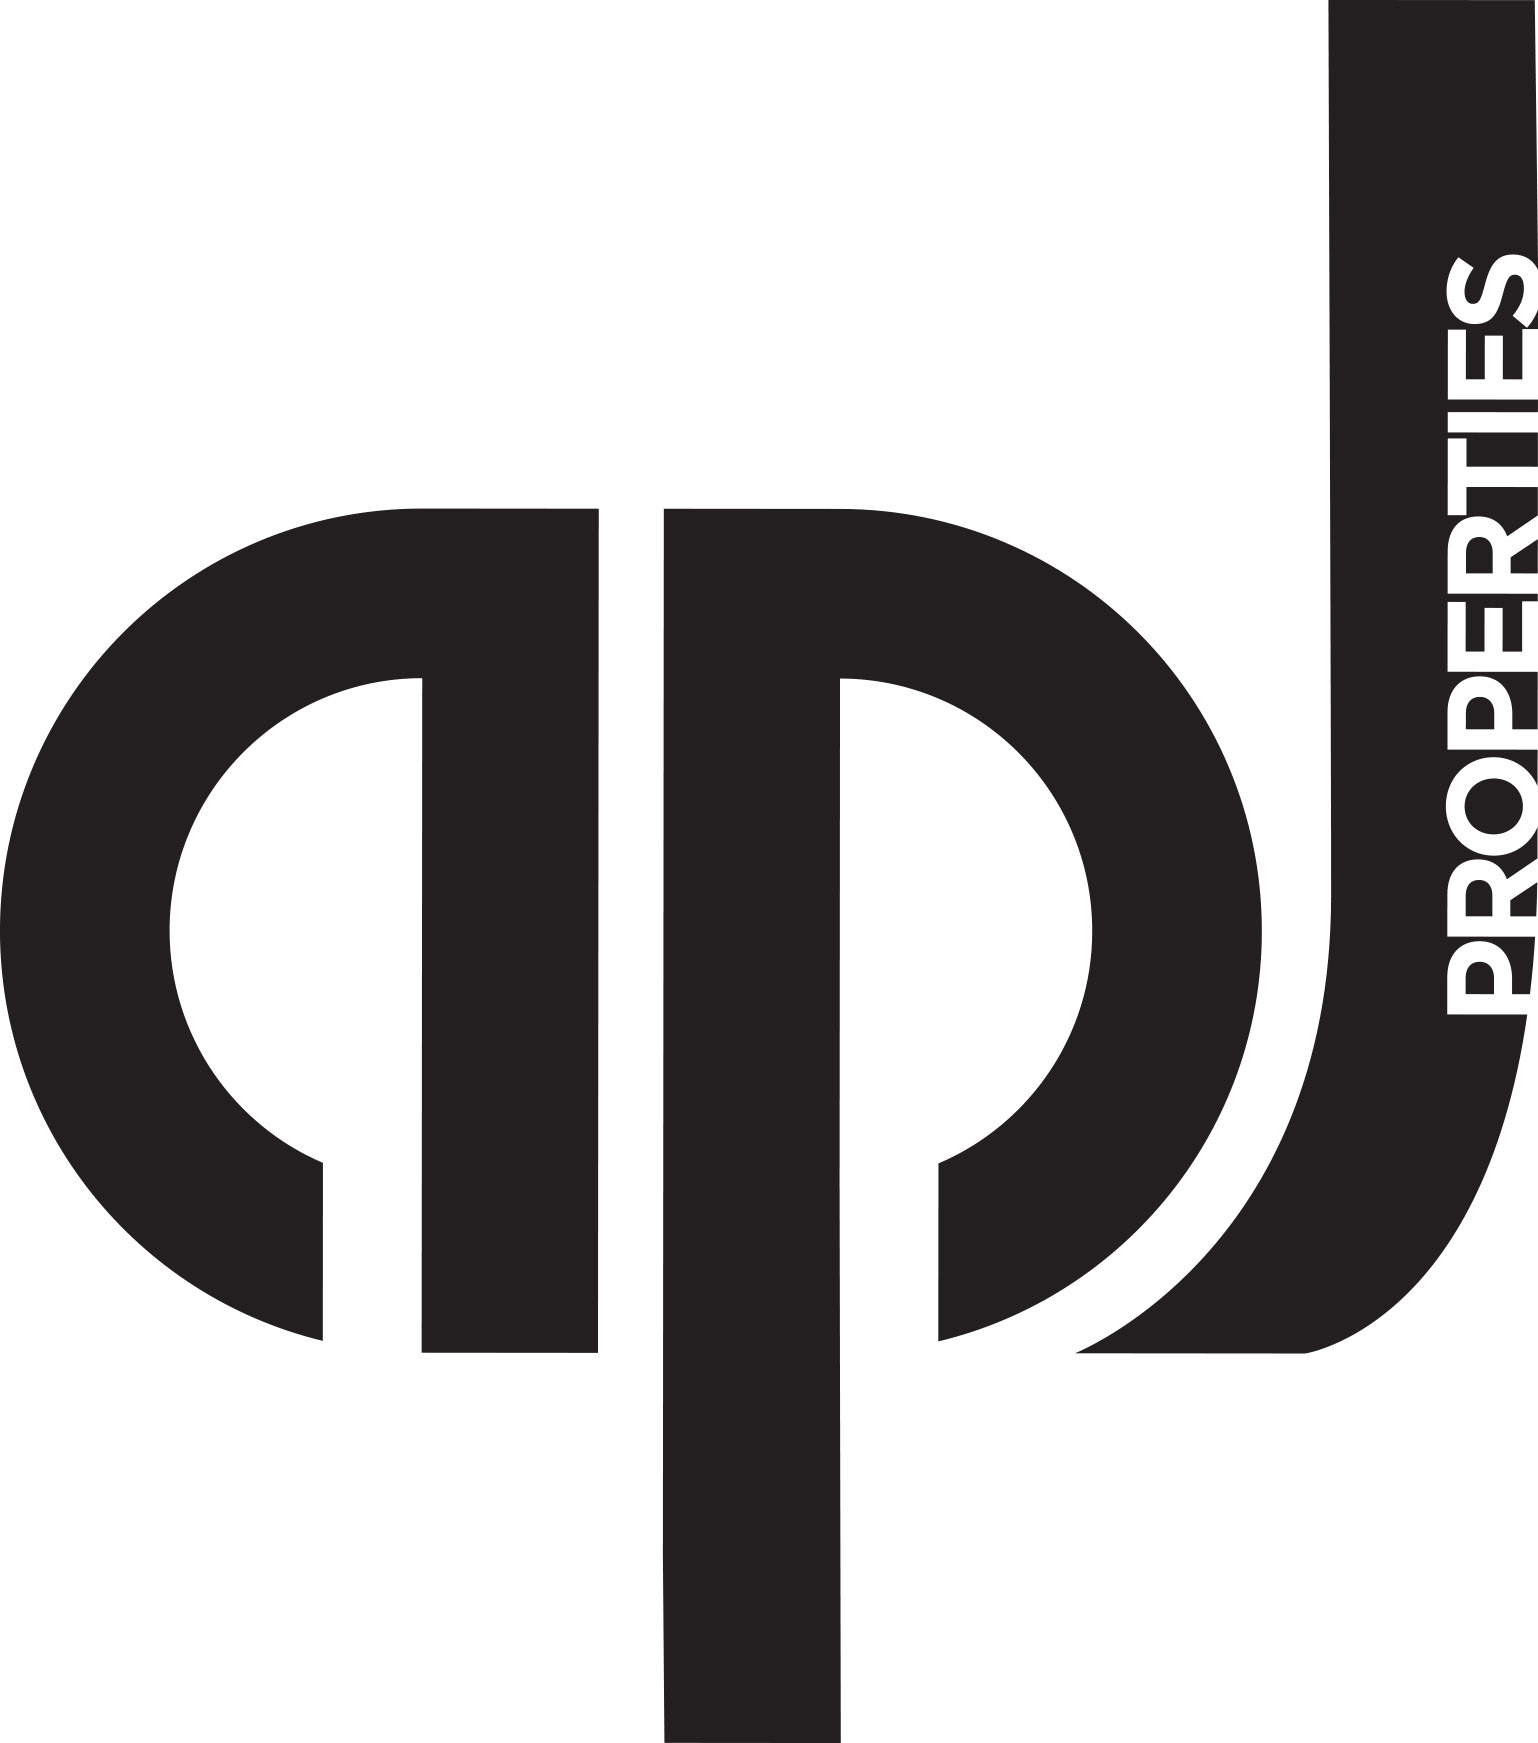 APL Properties company logo